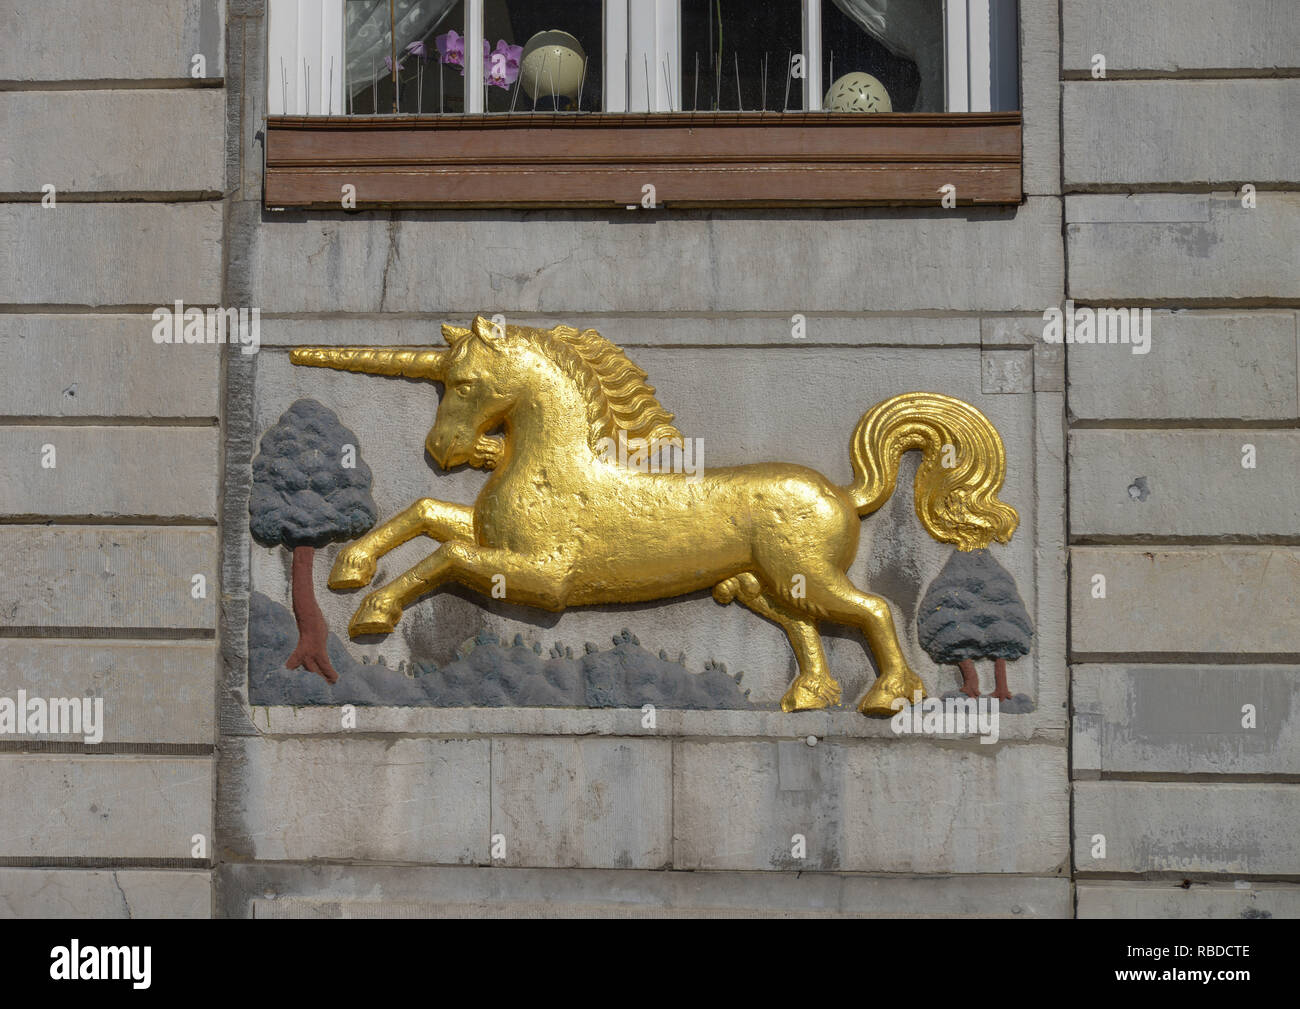 "Ristorante ''al golden unicorn'', mercato, Aachen, nel Land Renania settentrionale-Vestfalia,', Gaststaette 'Zum Goldenen Einhorn', Markt, Nordrhein-Westfale Foto Stock